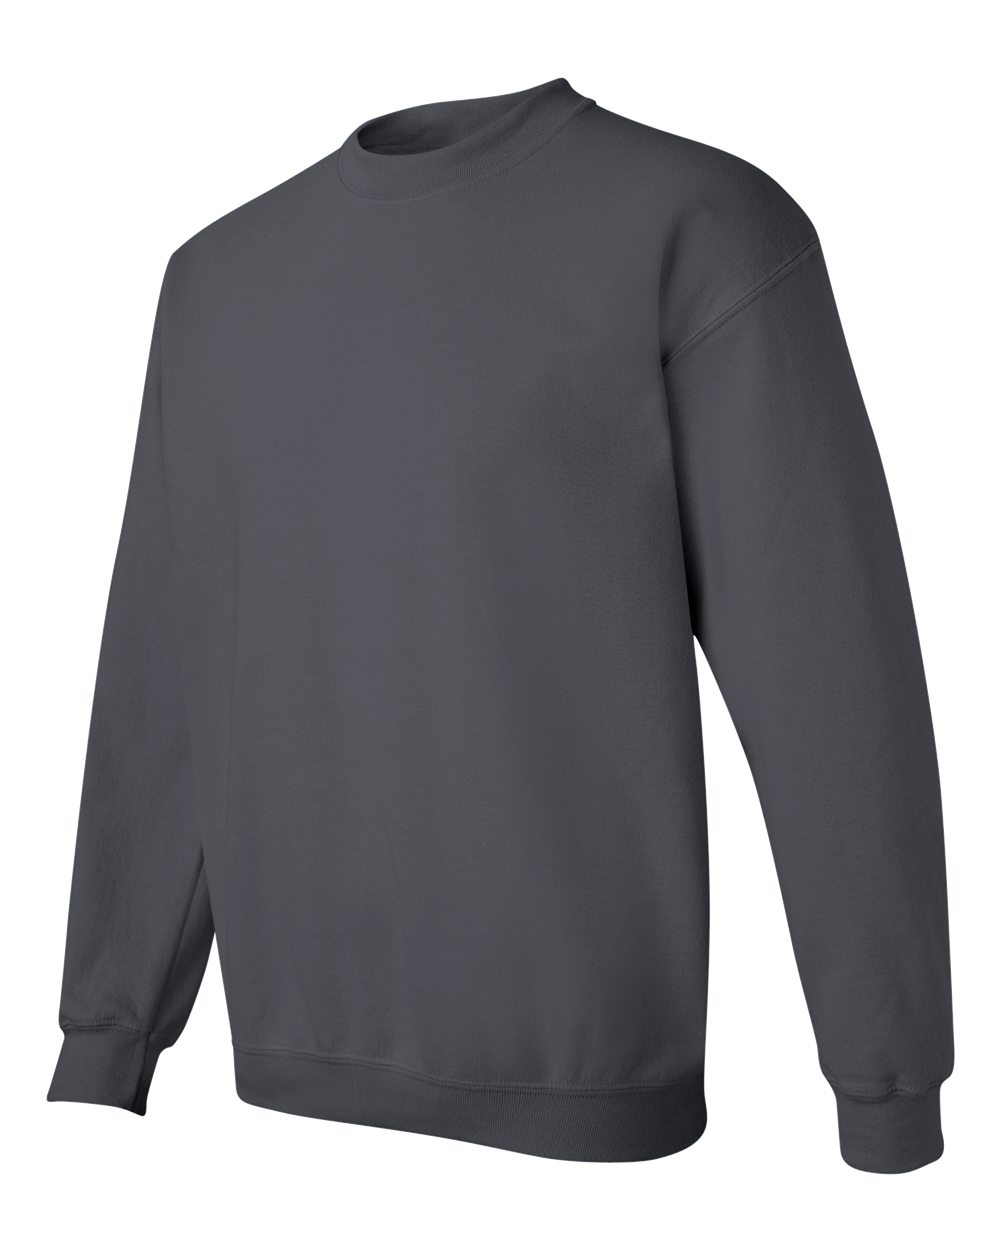 Gildan Heavy Blend Crew Neck sweater GI18000 Charcoal